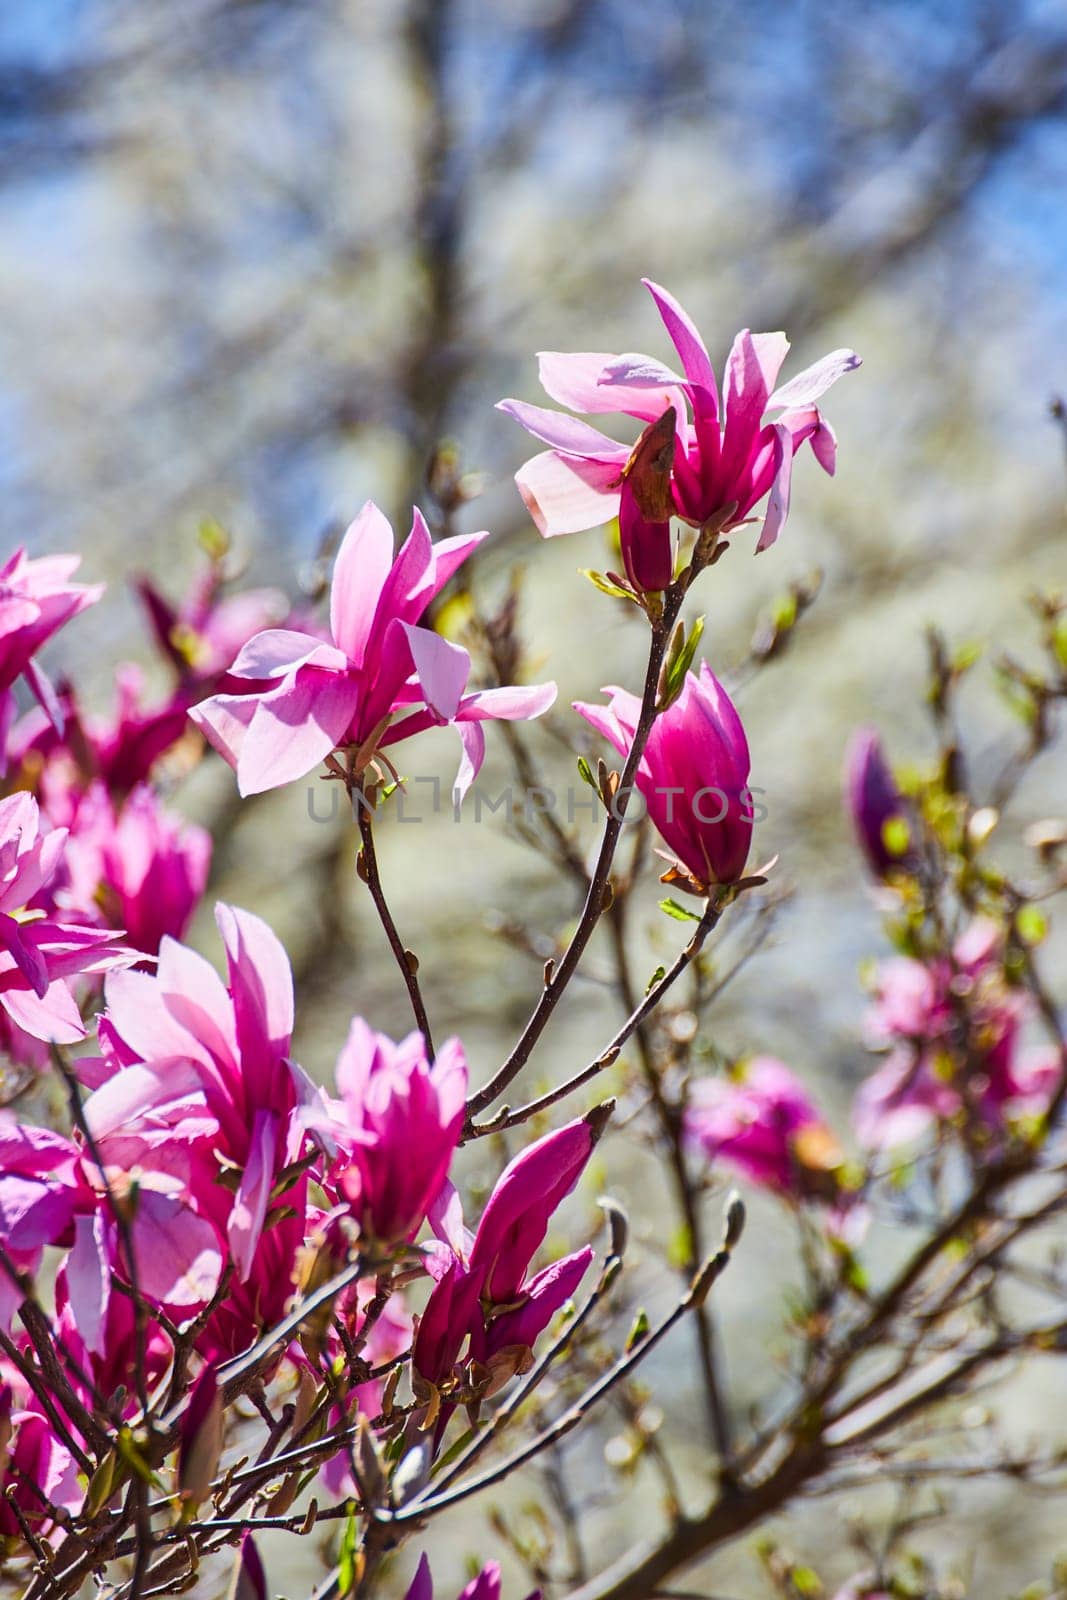 Spring Awakening: Pink magnolia blossoms bloom vibrantly in a serene Fort Wayne park.